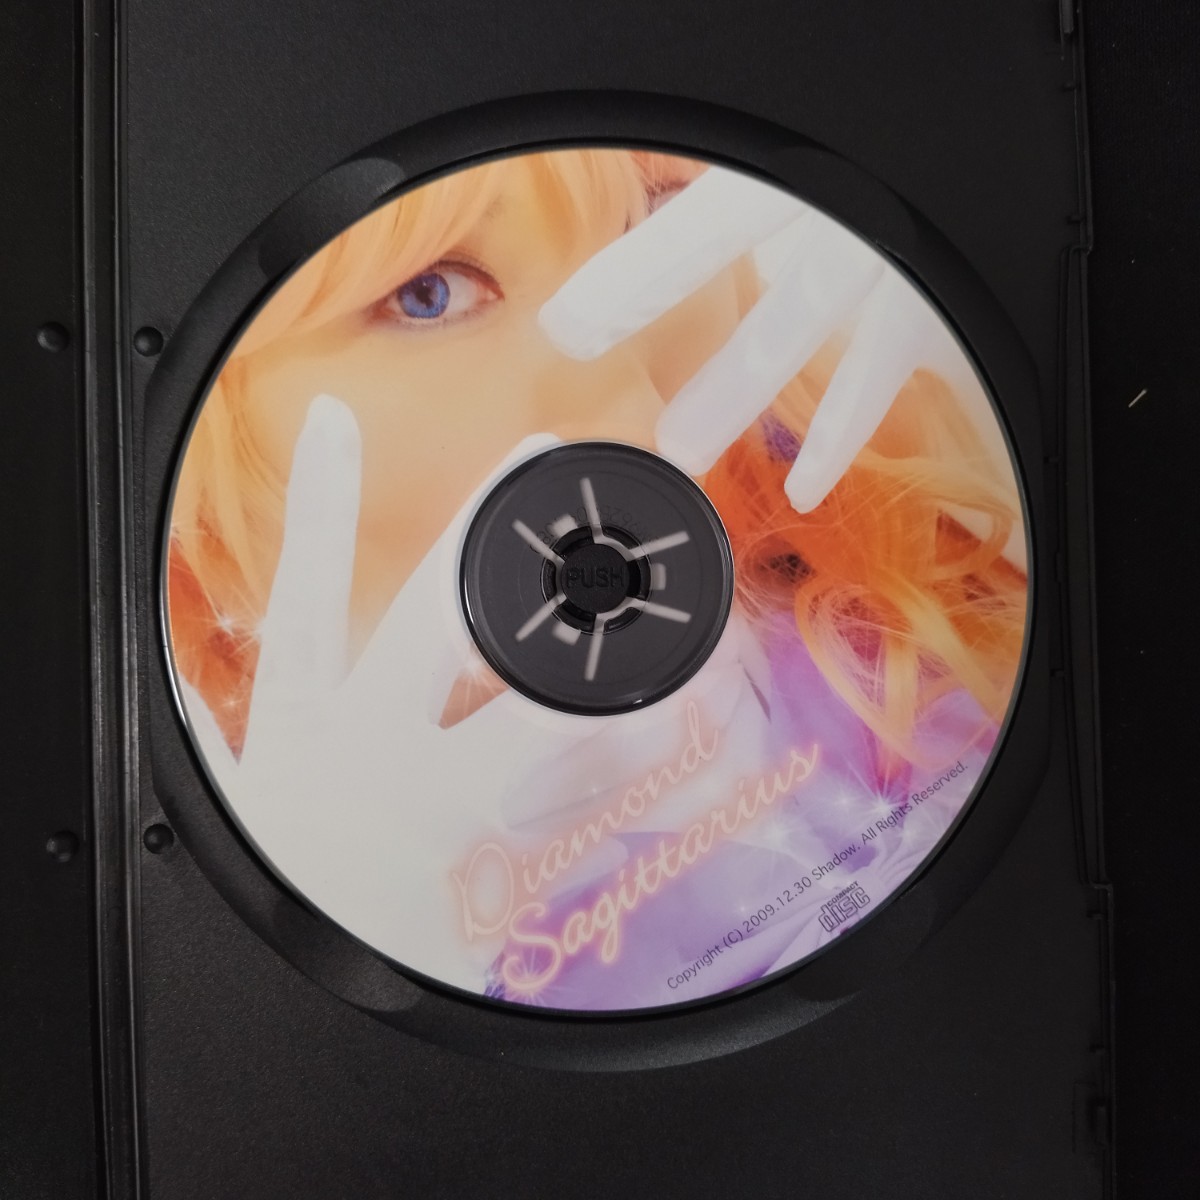 CD 写真集 コスプレ デジタル写真集 同人 CD-ROM Diamond Sagittarius マクロス なえきち_画像3